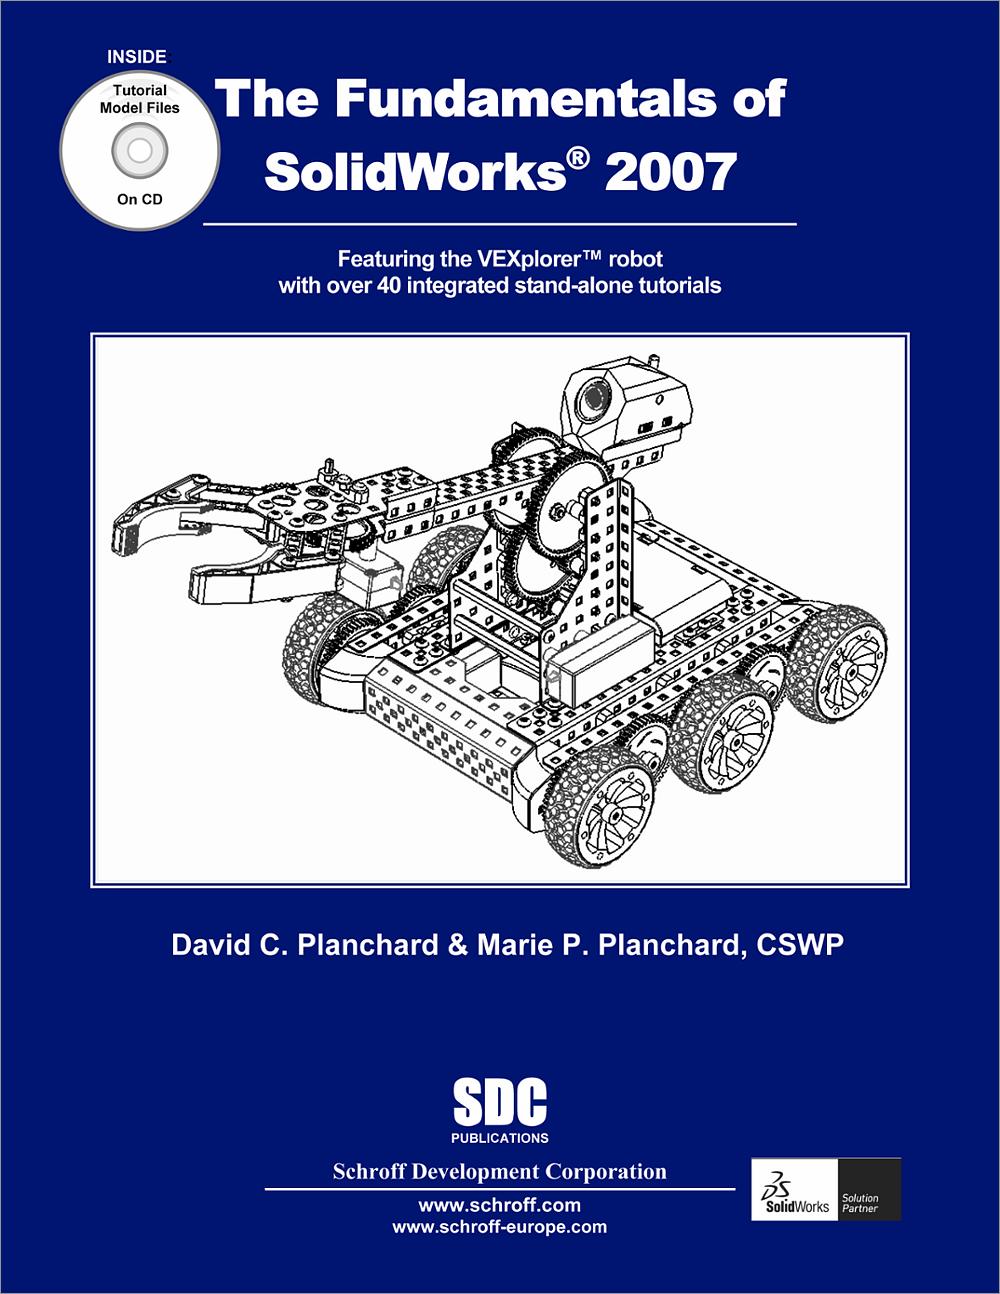 solidworks 2017 book pdf free download david c. planchard